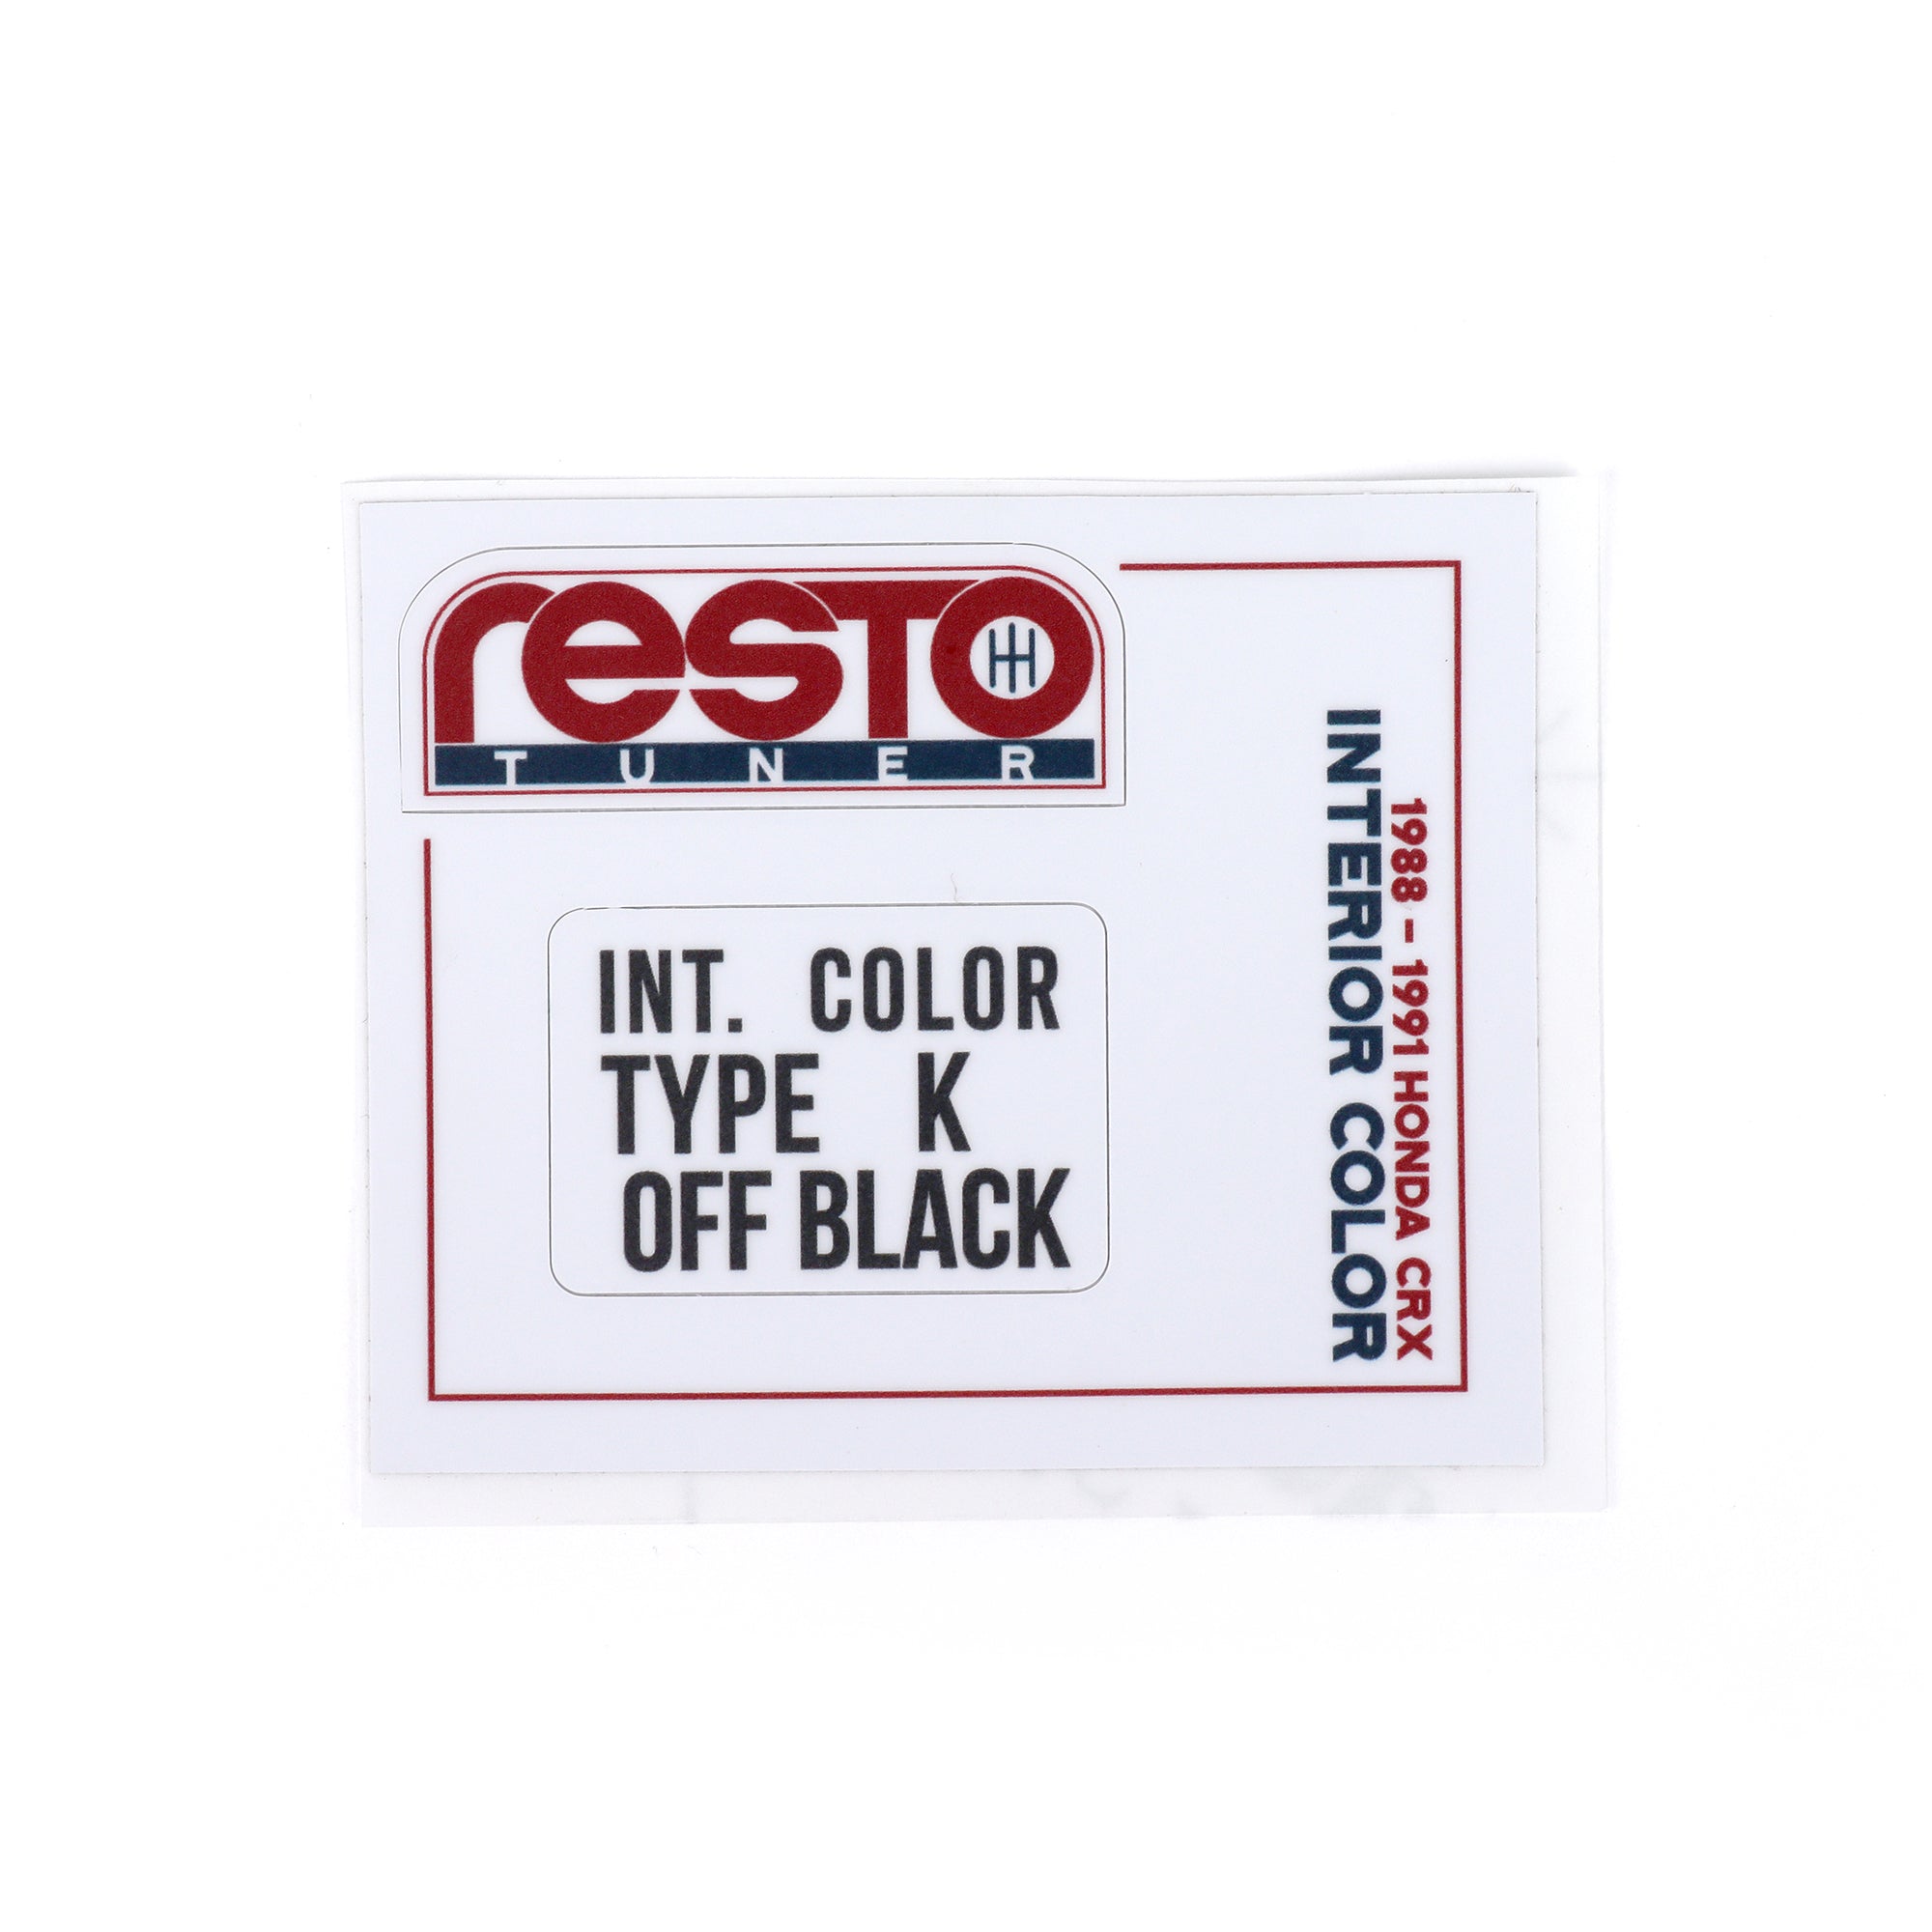 RestoTuner Honda Paint Code Replacement Decals - Interior Color Type K - Off Black RST-DCL-01-65